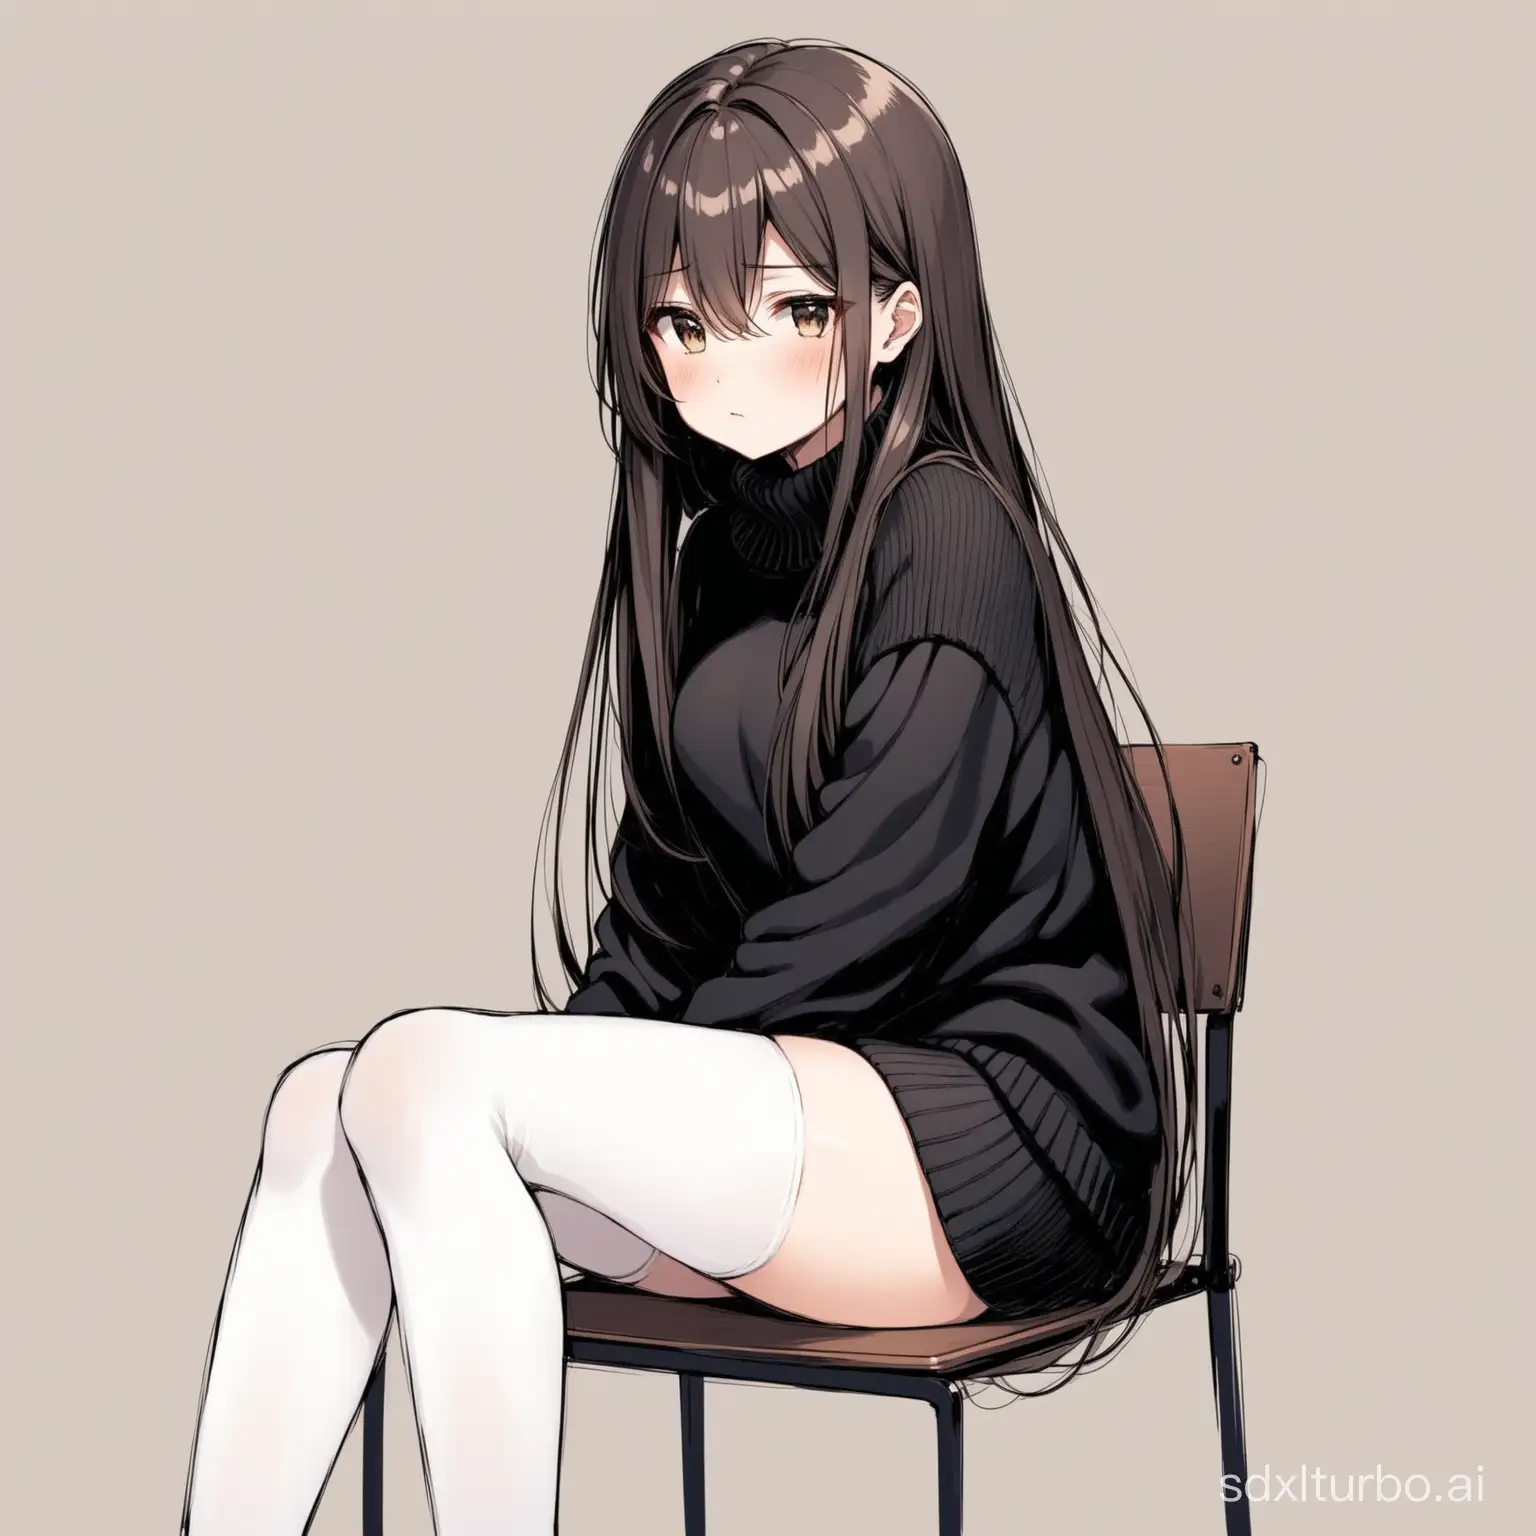 Sitting posture, girl, disdainful face, long hair, black sweater, white stockings